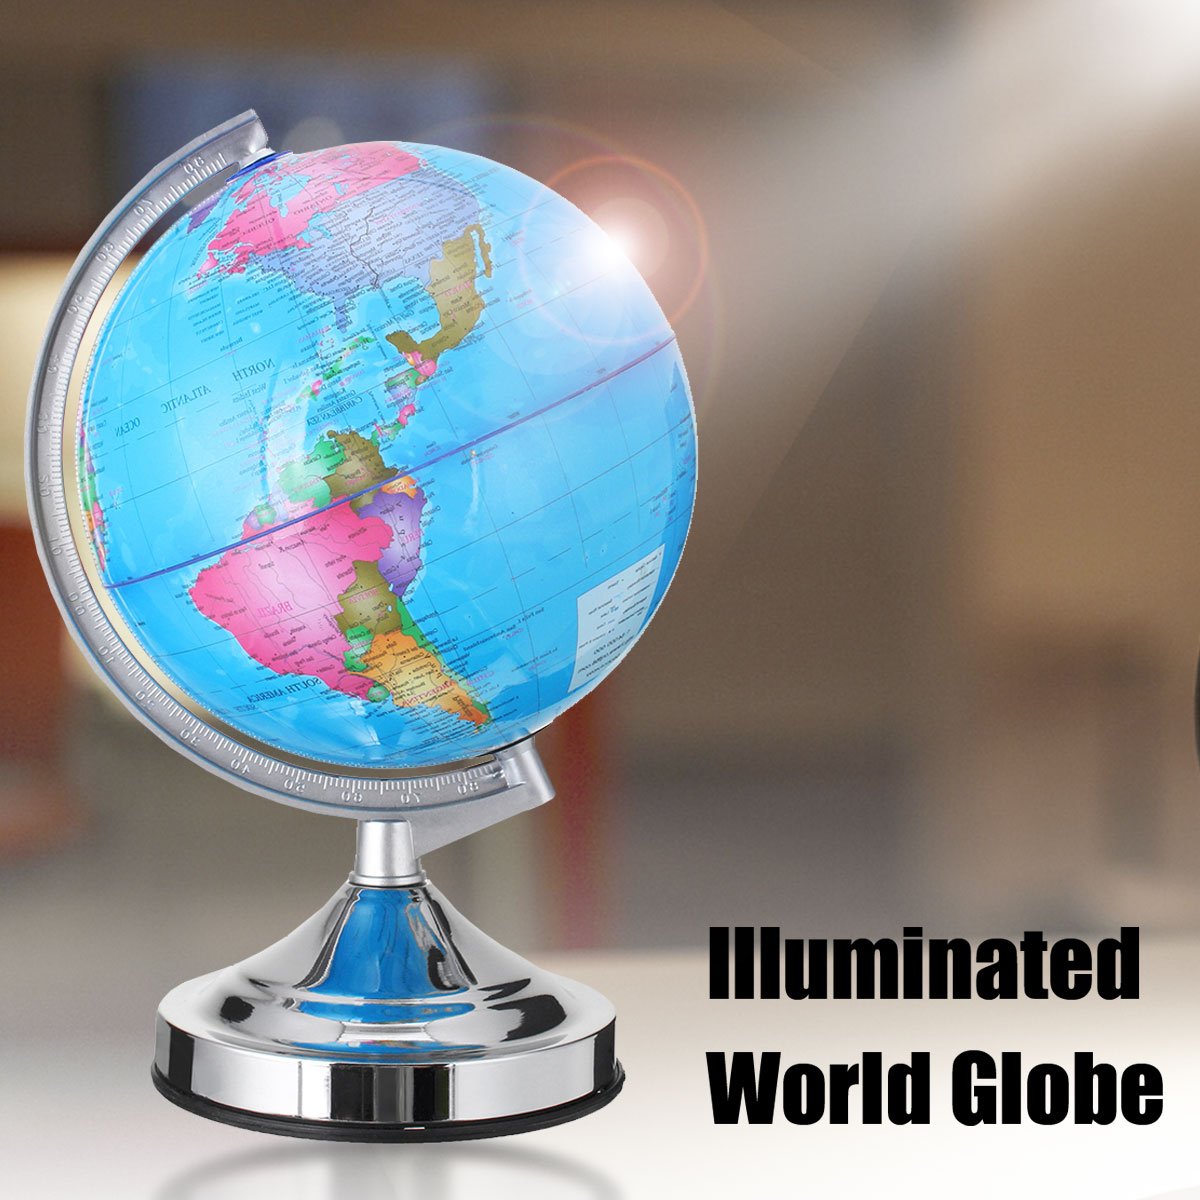 Illuminated-Lamp-Rotating-World-Earth-Globe-Ocean-Desk-Globe-LED-Night-Light-1420351-1